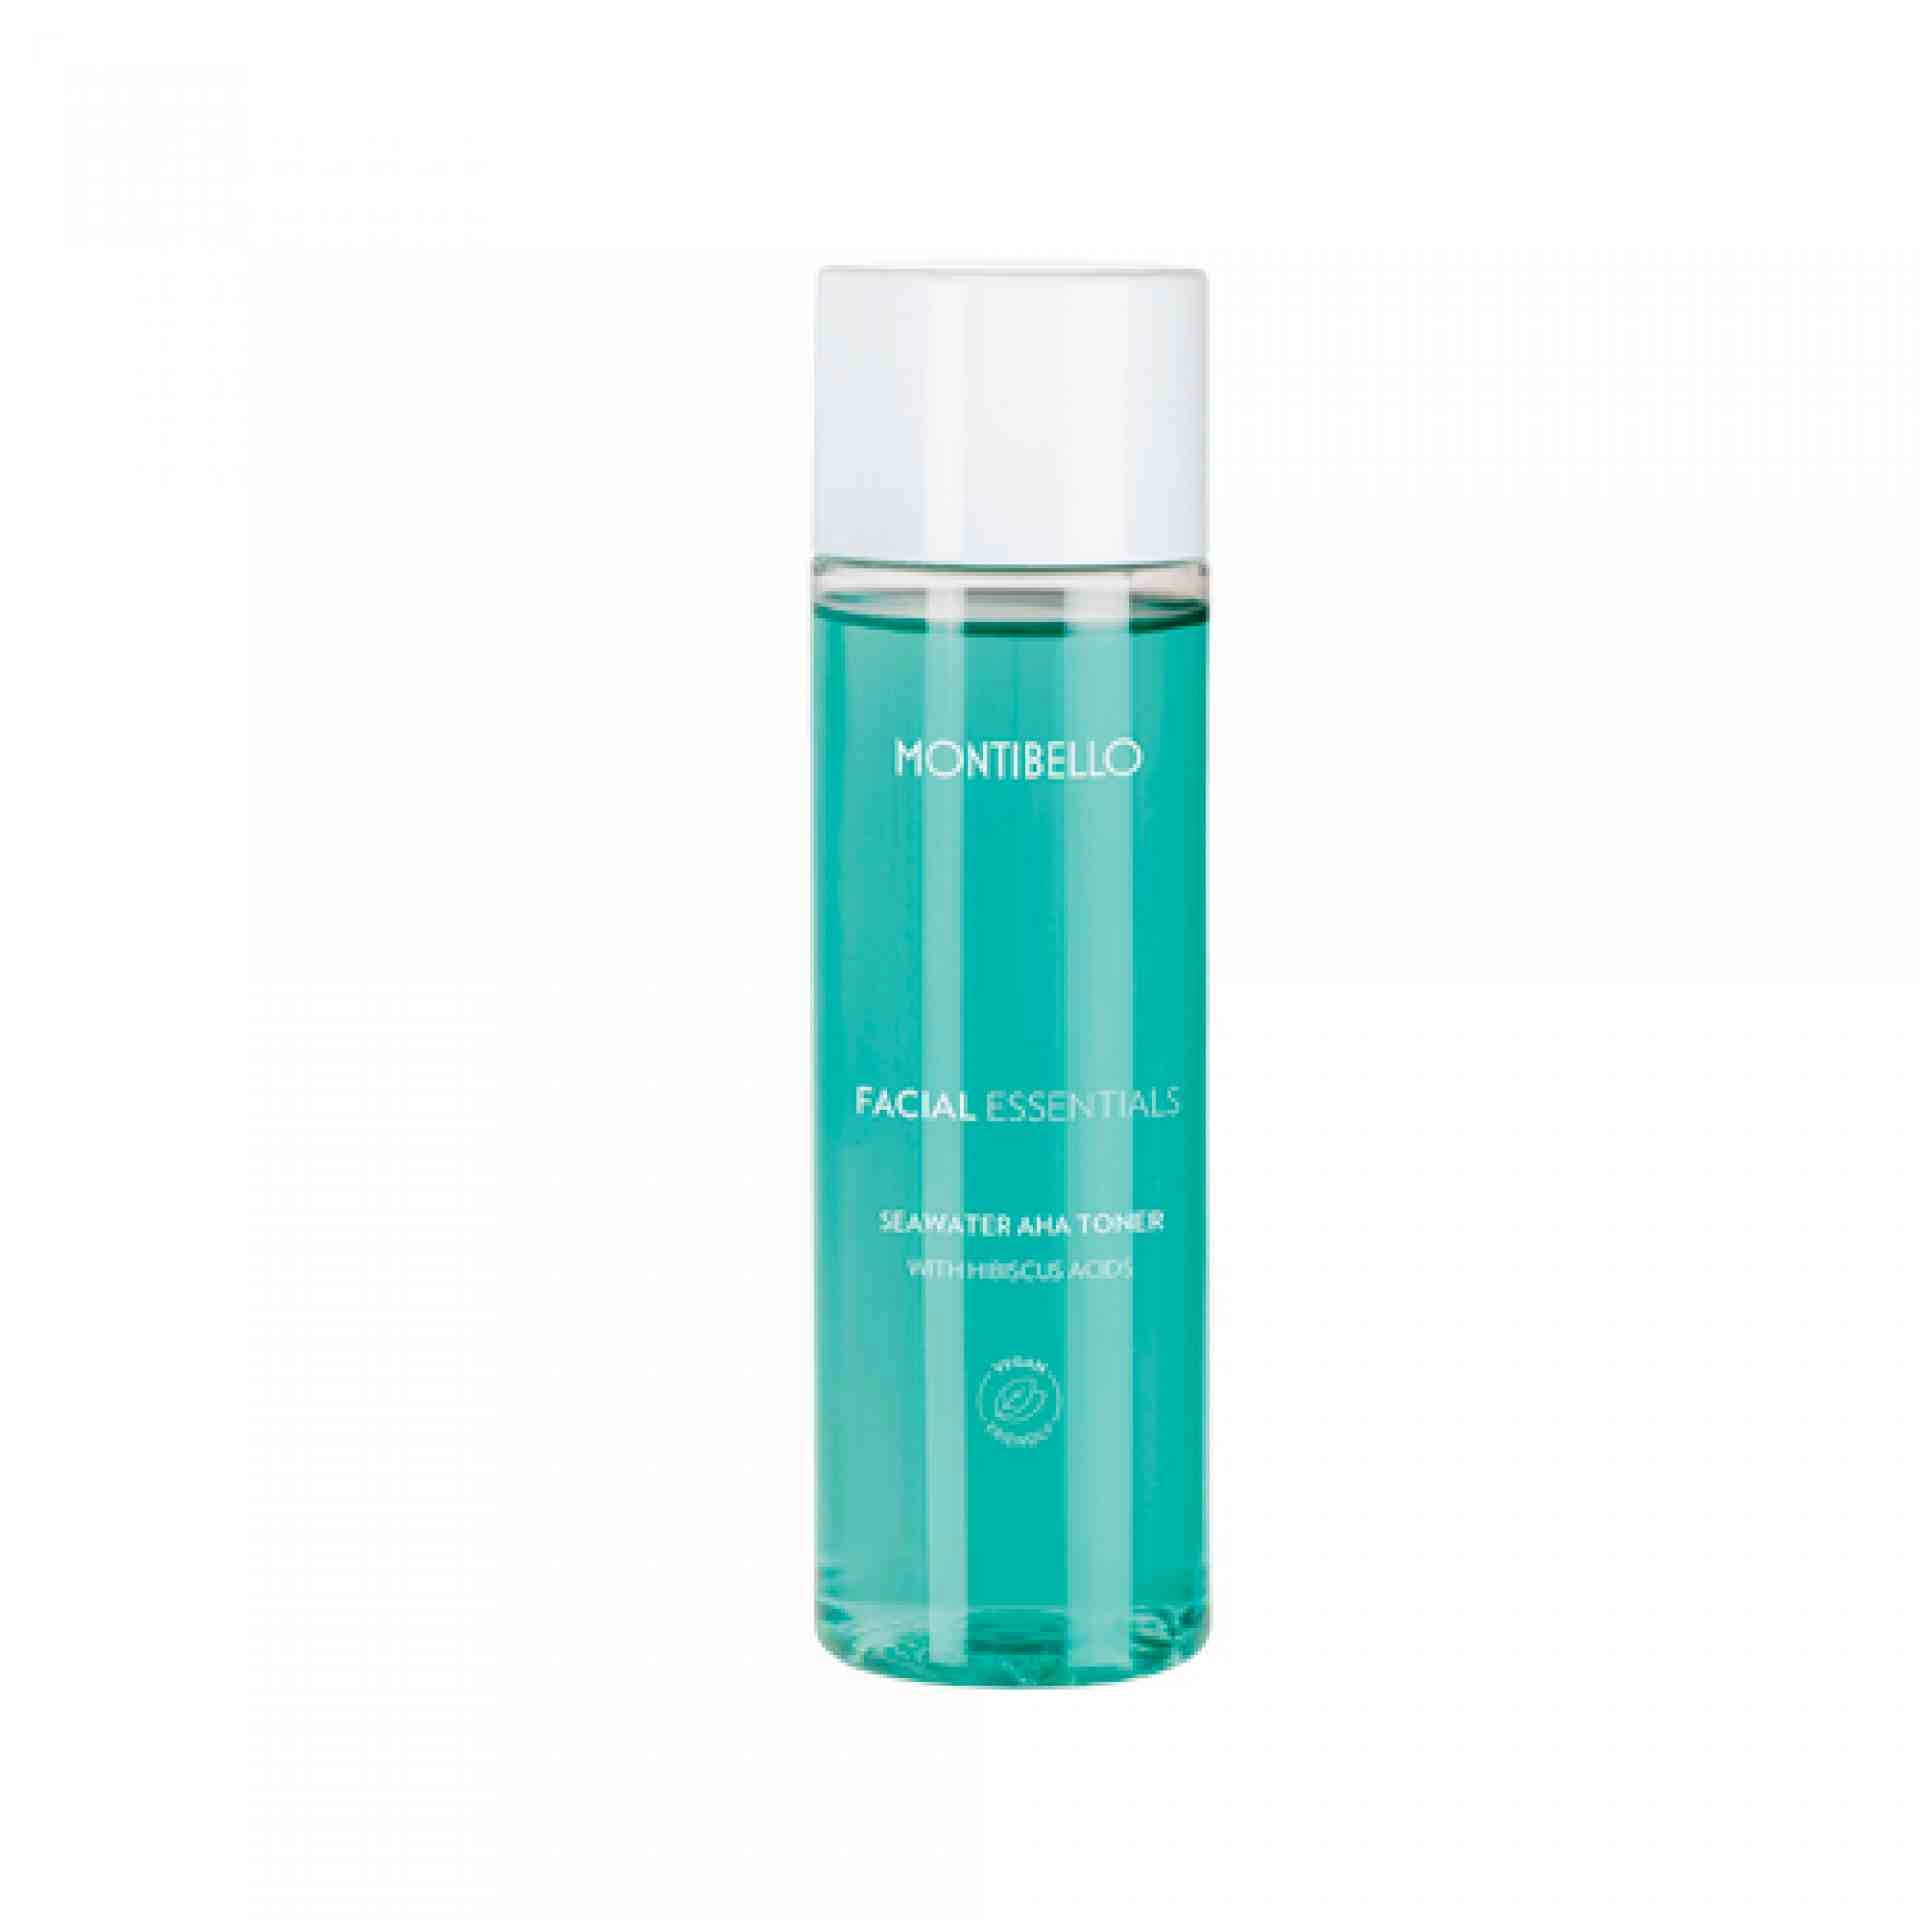 Seawater AHA Toner | Tónico Exfoliante 200 ml - Facial Essentiales - Montibello ®